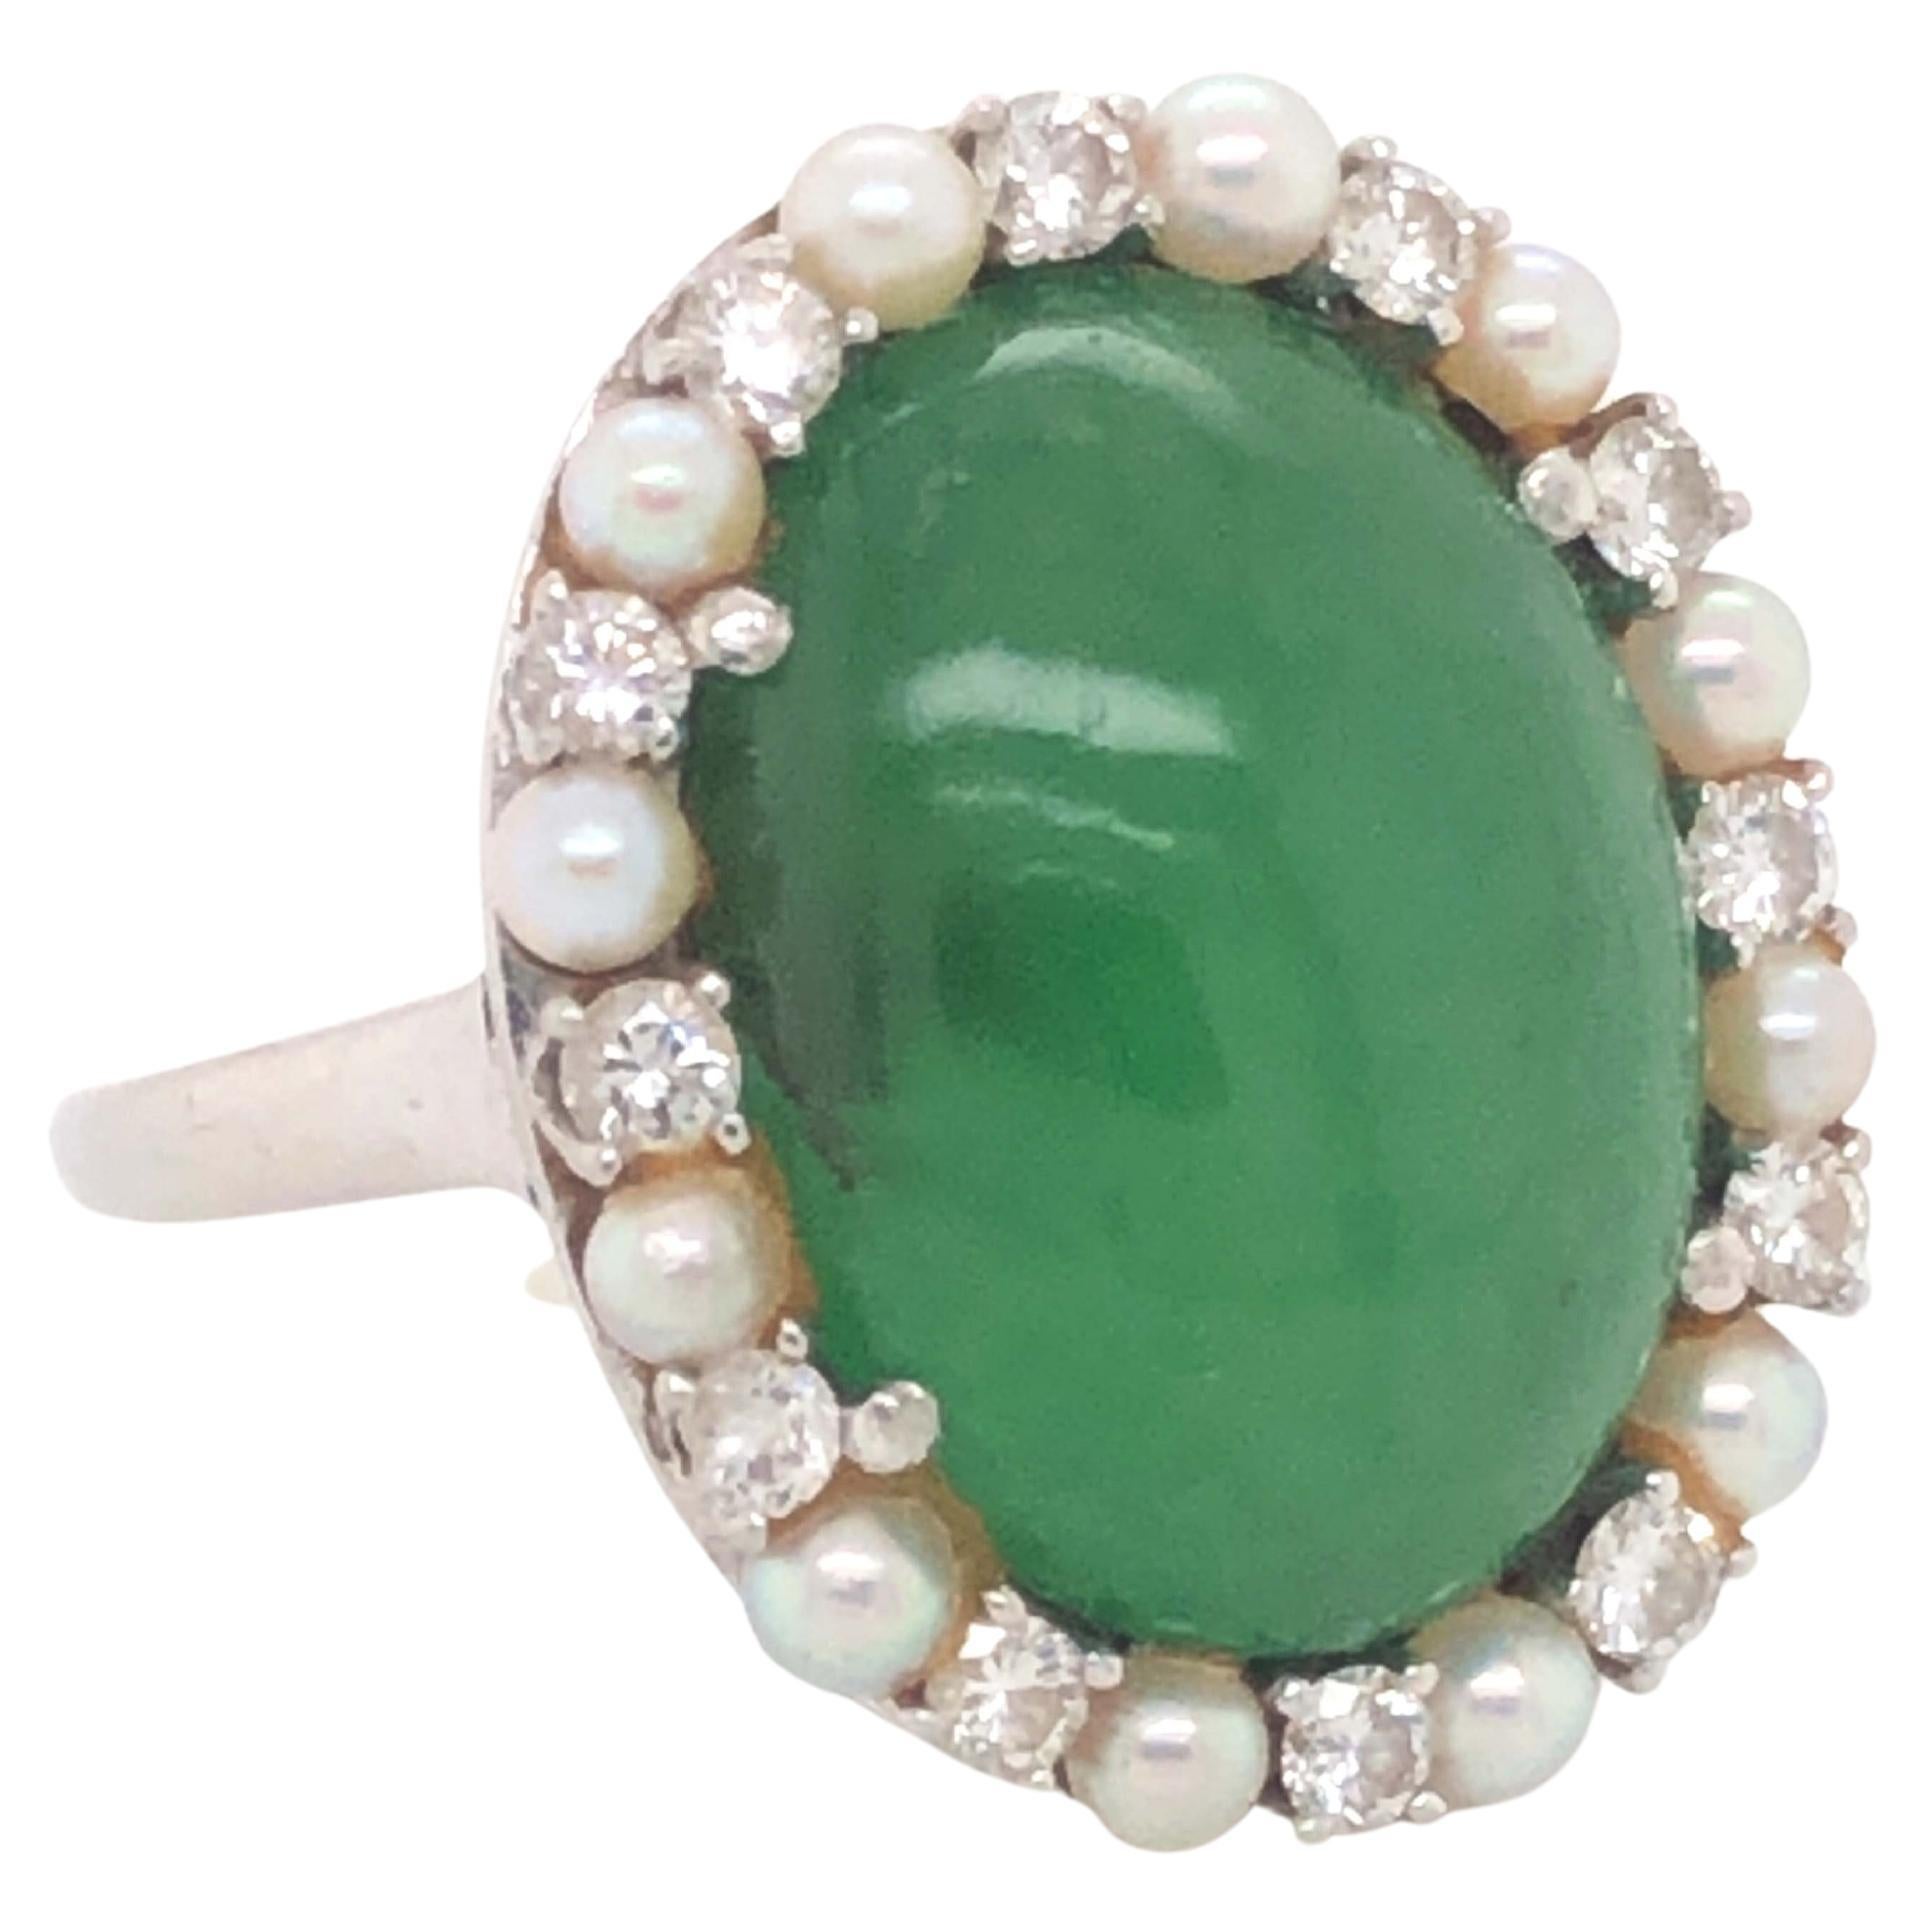 Vintage Oval Double Cabochon Green Jadeite Jade Pearl and Diamond Halo Ring in Platinum. Jade de forme ovale à double cabochon de jadéite verte avec un halo de perles et de diamants. Livré avec le rapport GIA n° 5234035329. La commande sera